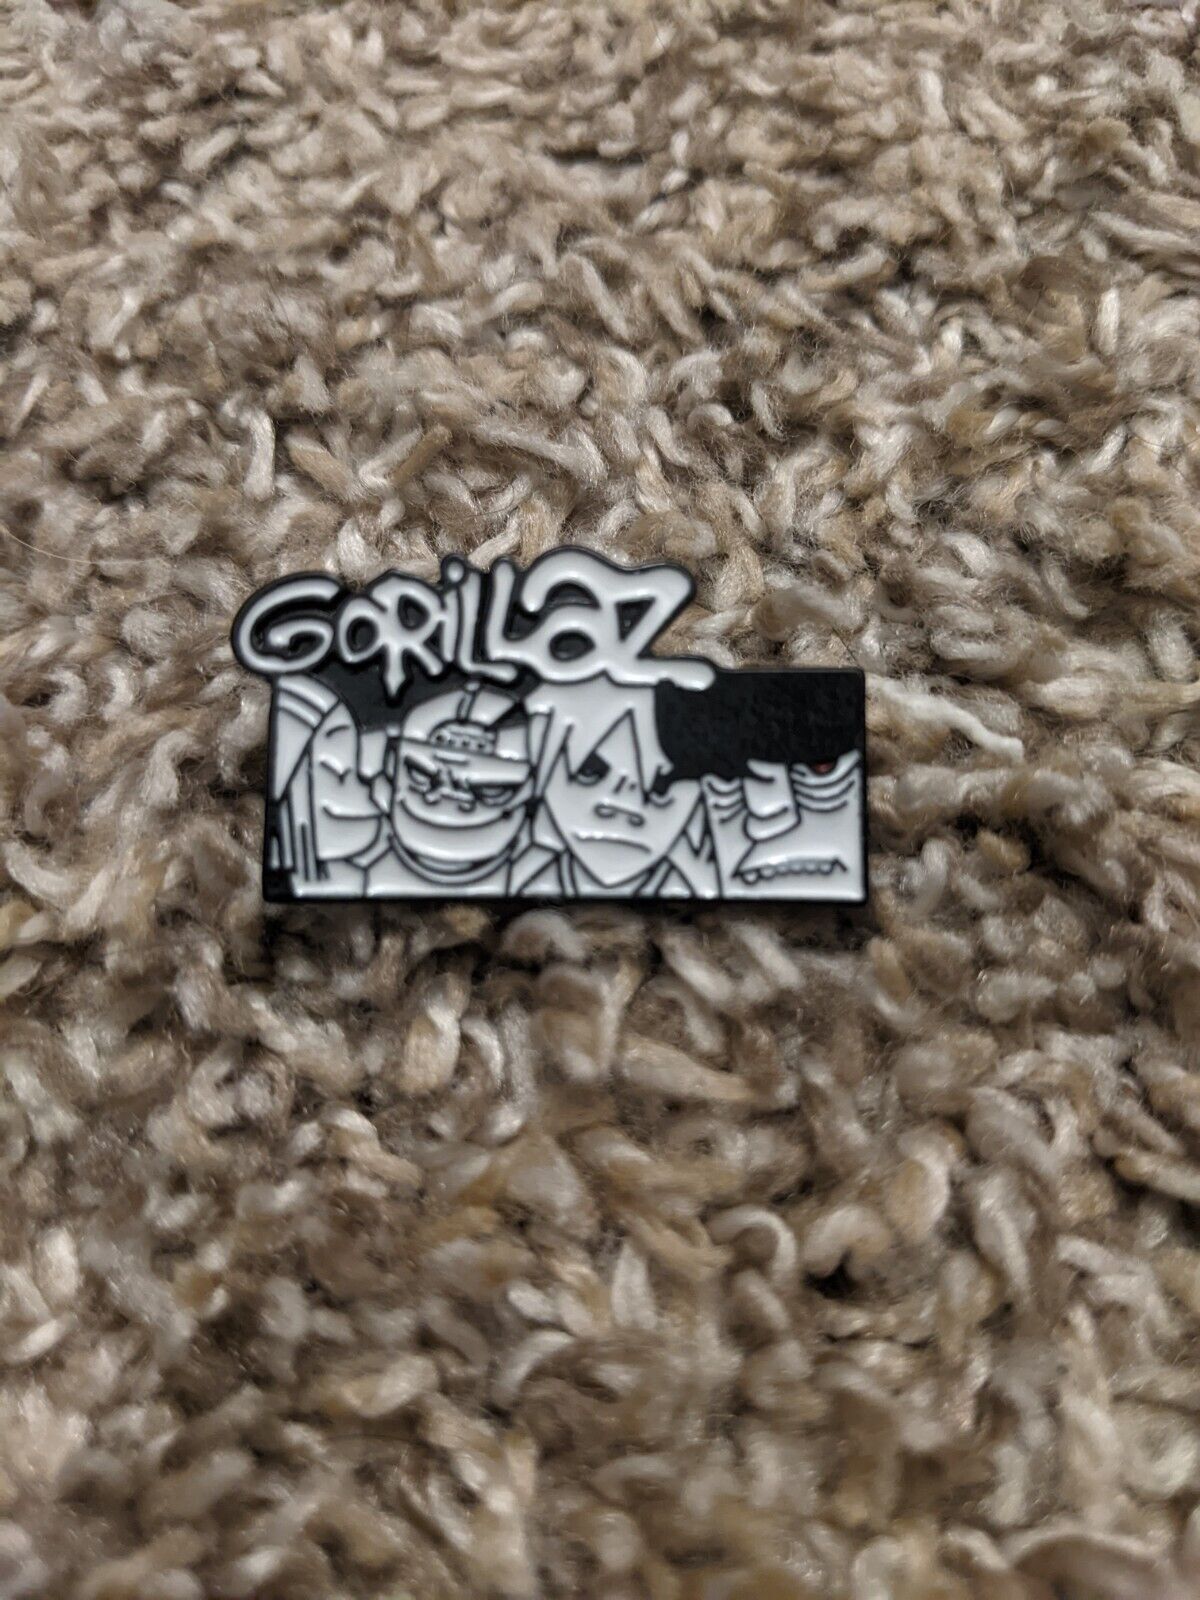 Gorillaz Enamel Pin - New Metal Pin Gorillaz